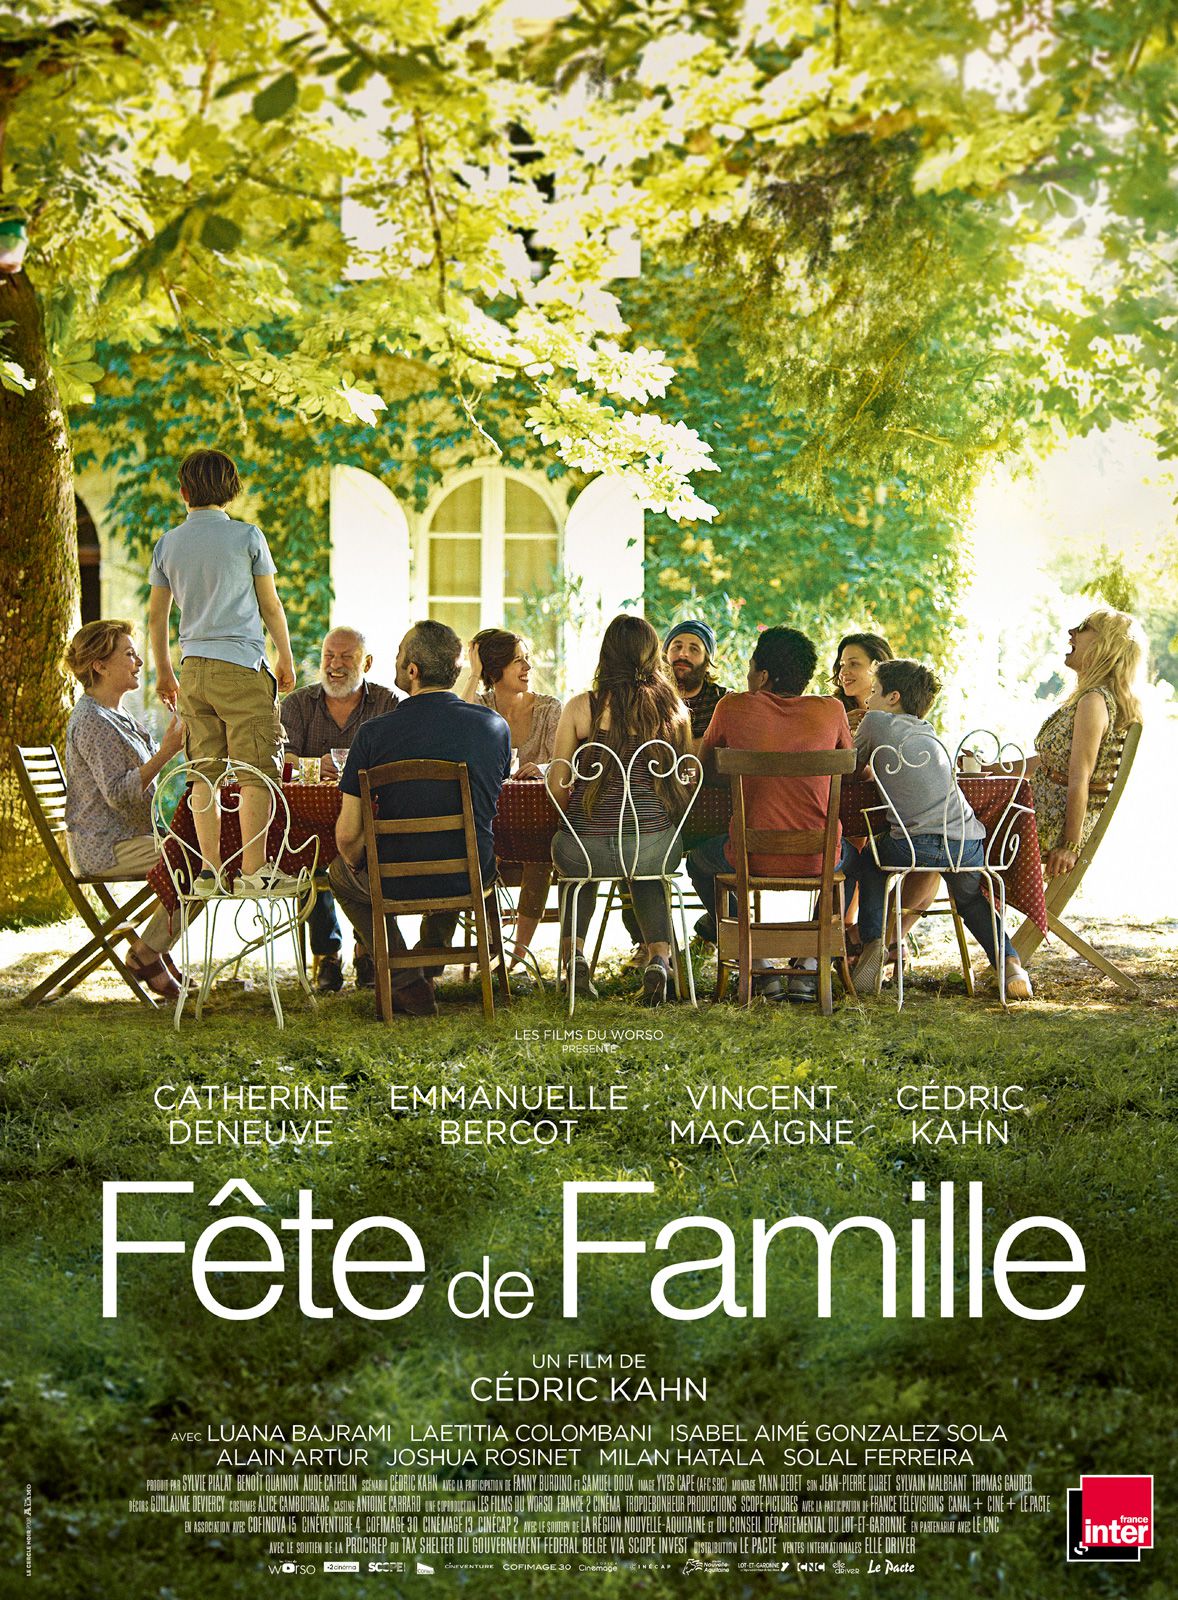 Fête de famille - Film (2019) streaming VF gratuit complet